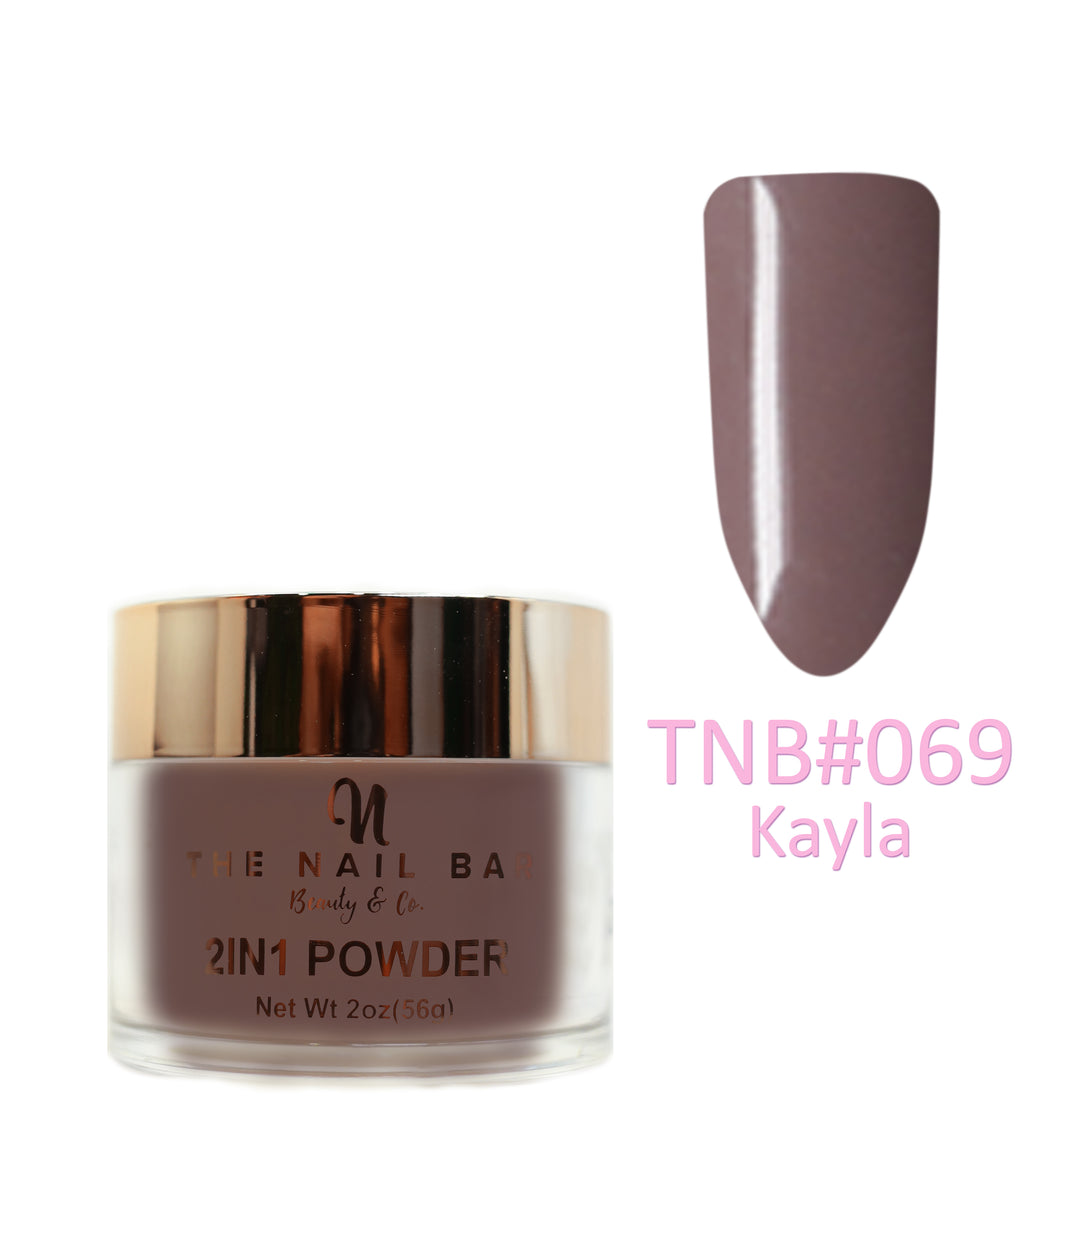 2-In-1 Dipping/Acrylic colour powder (2oz) -Kayla - The Nail Bar Beauty & Co.